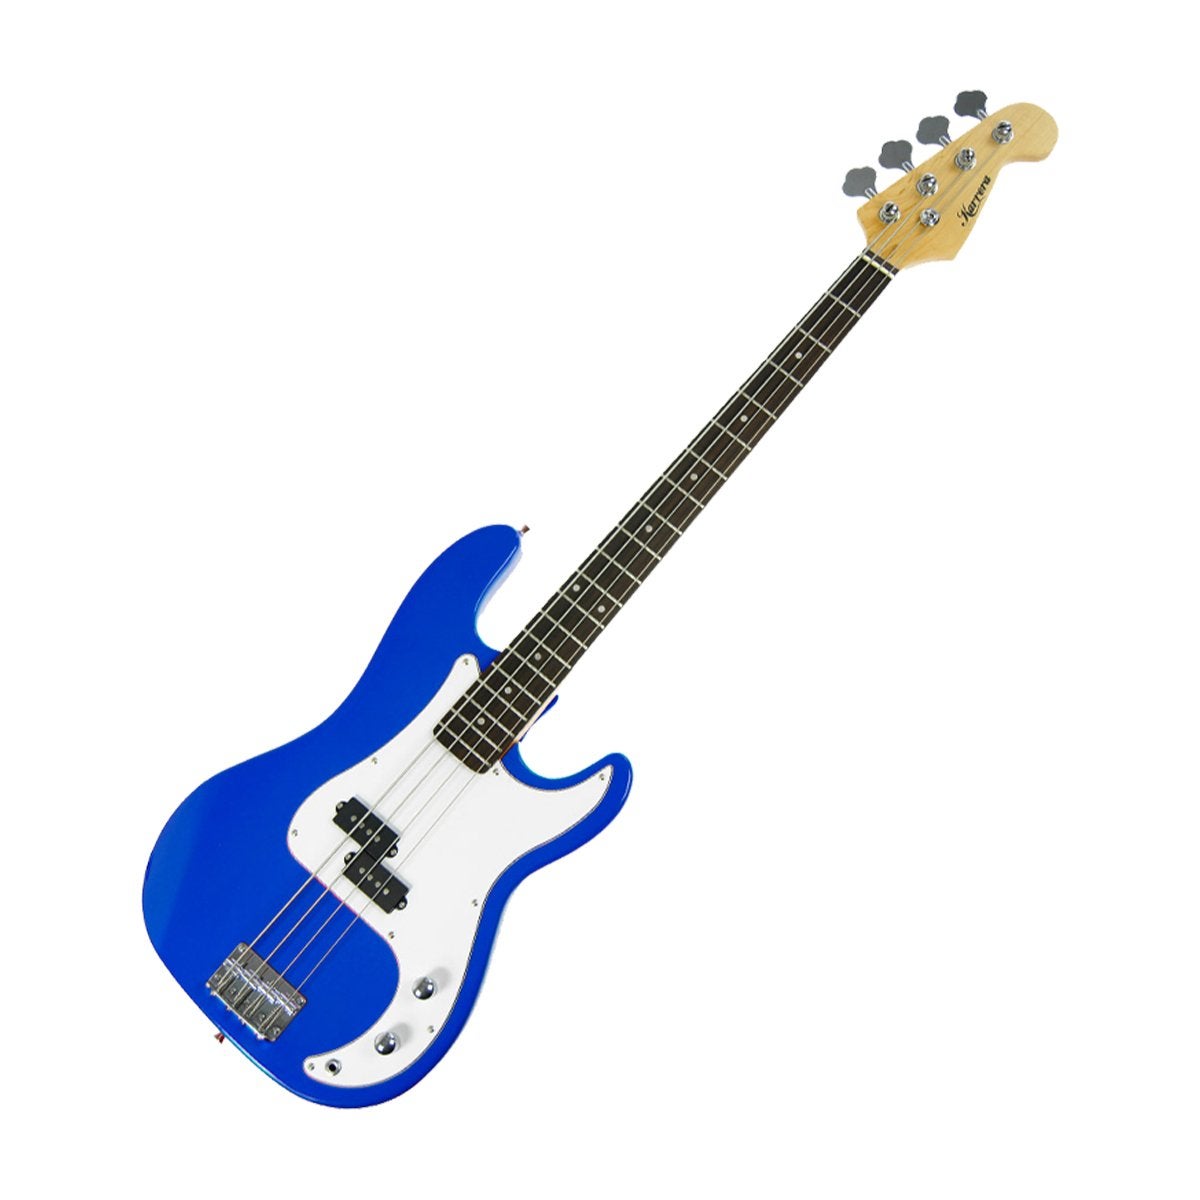 Karrera 4-String Electric Bass Guitar Musical Instrument - Blue